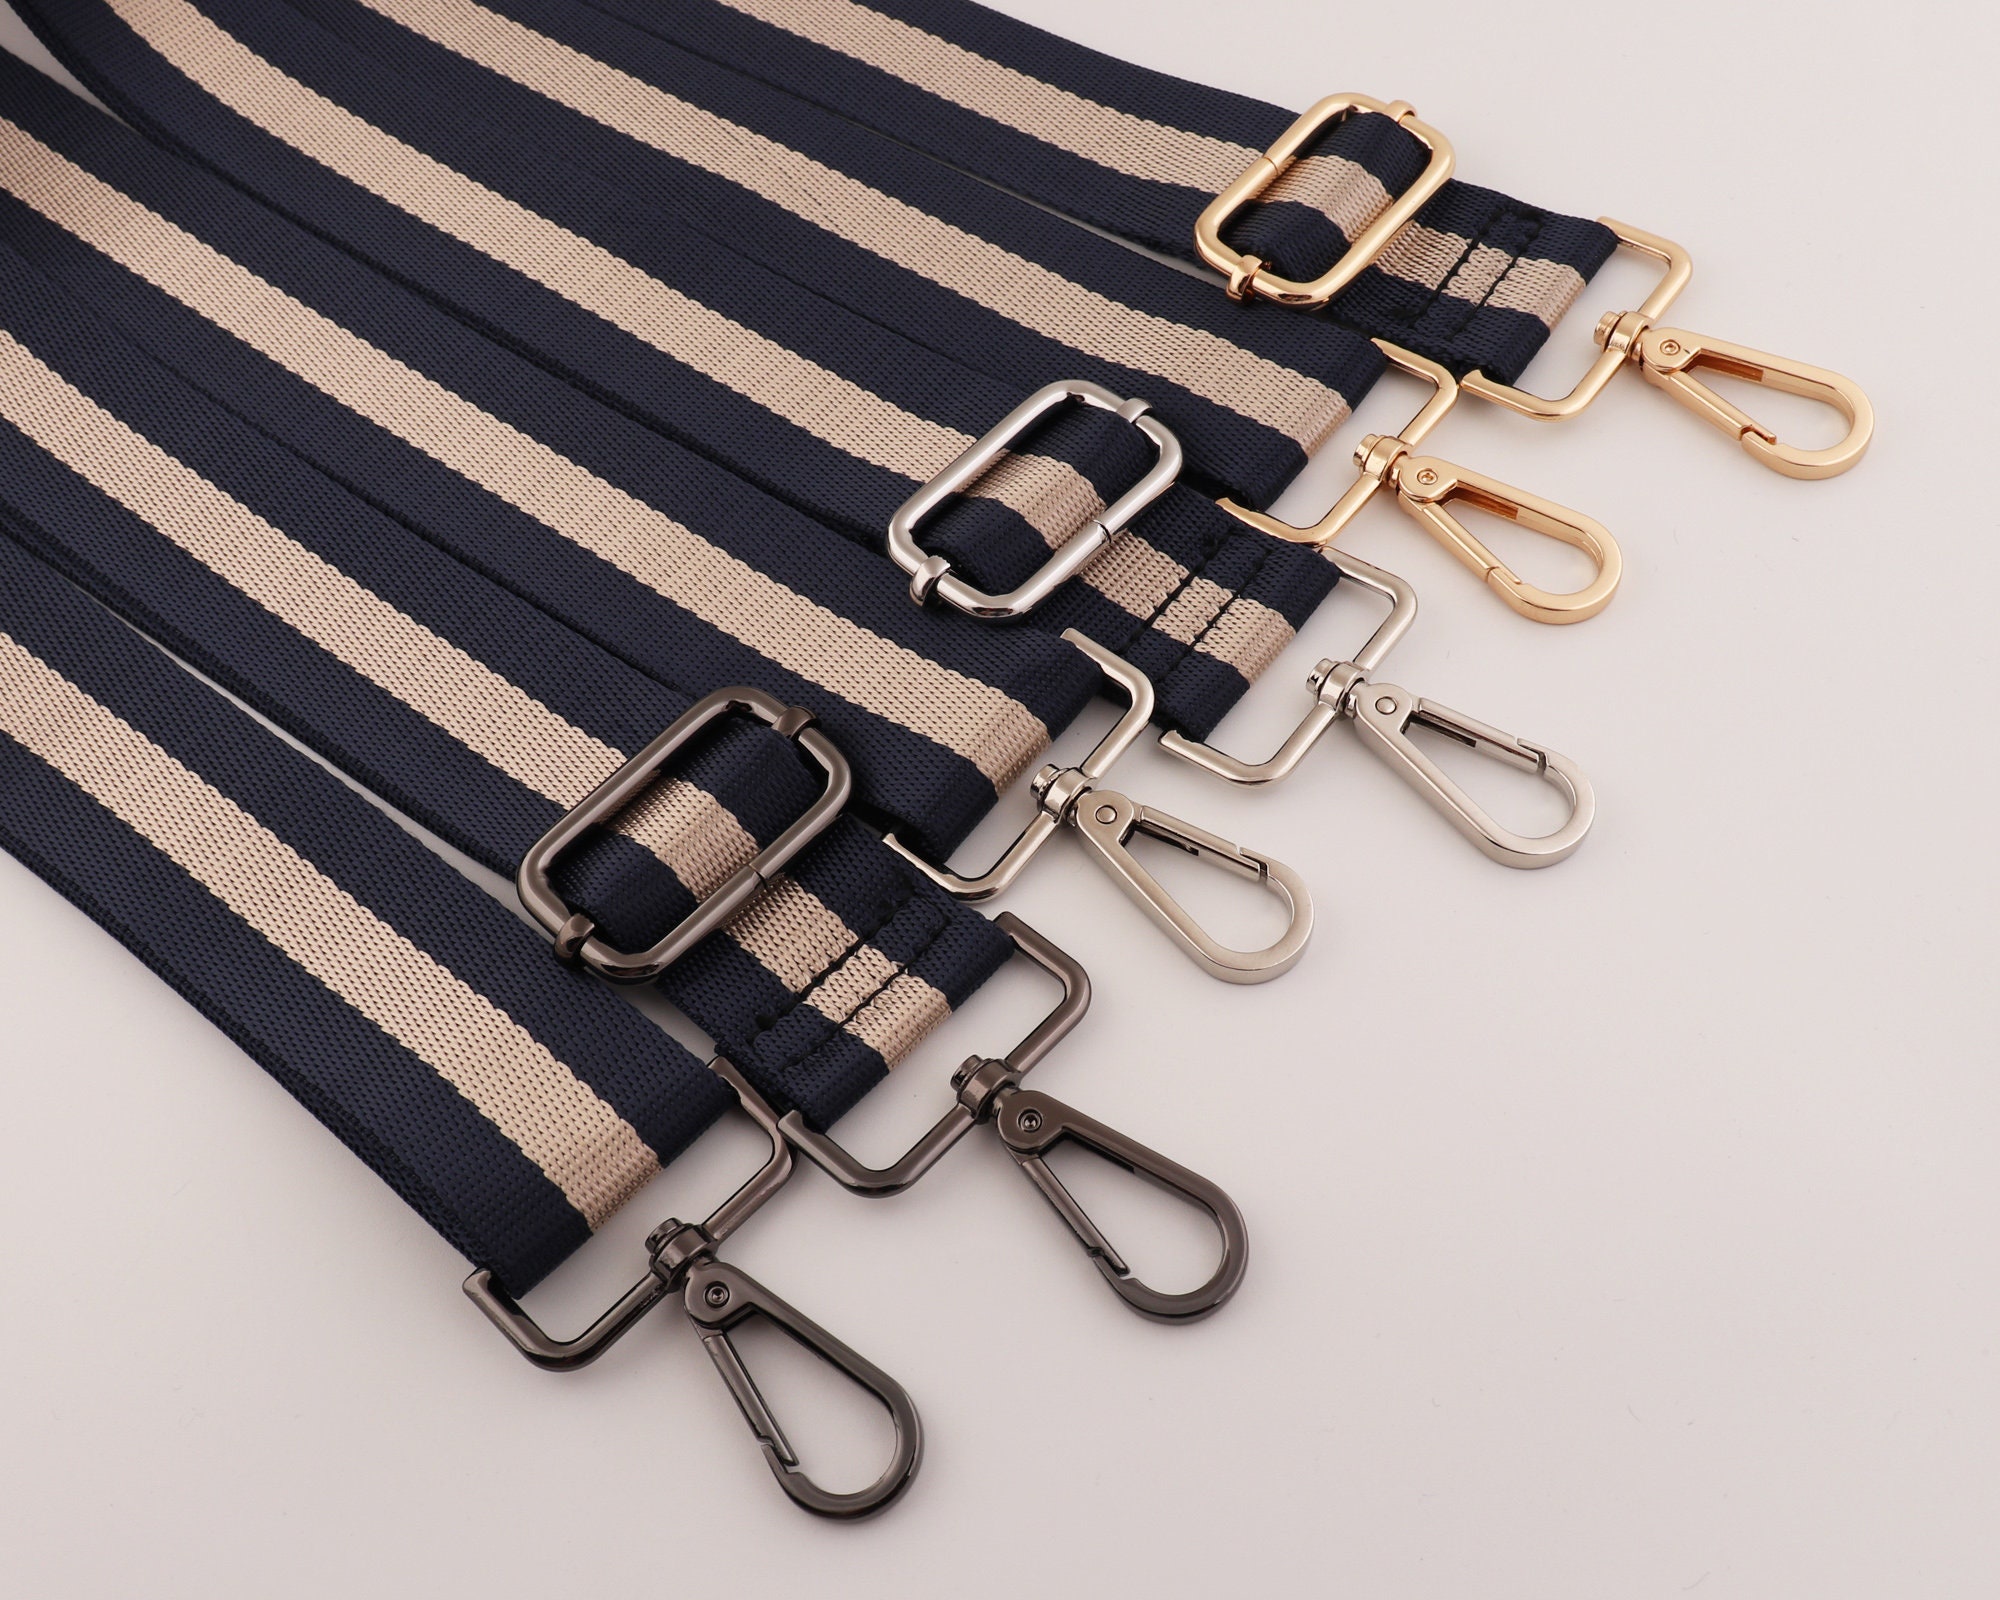  Purse Strap Adjustable Replacement Crossbody Wide Shoulder Bag  Sling Bag Straps Stripe Twill Silver Clasp Black White-Black : Arts, Crafts  & Sewing